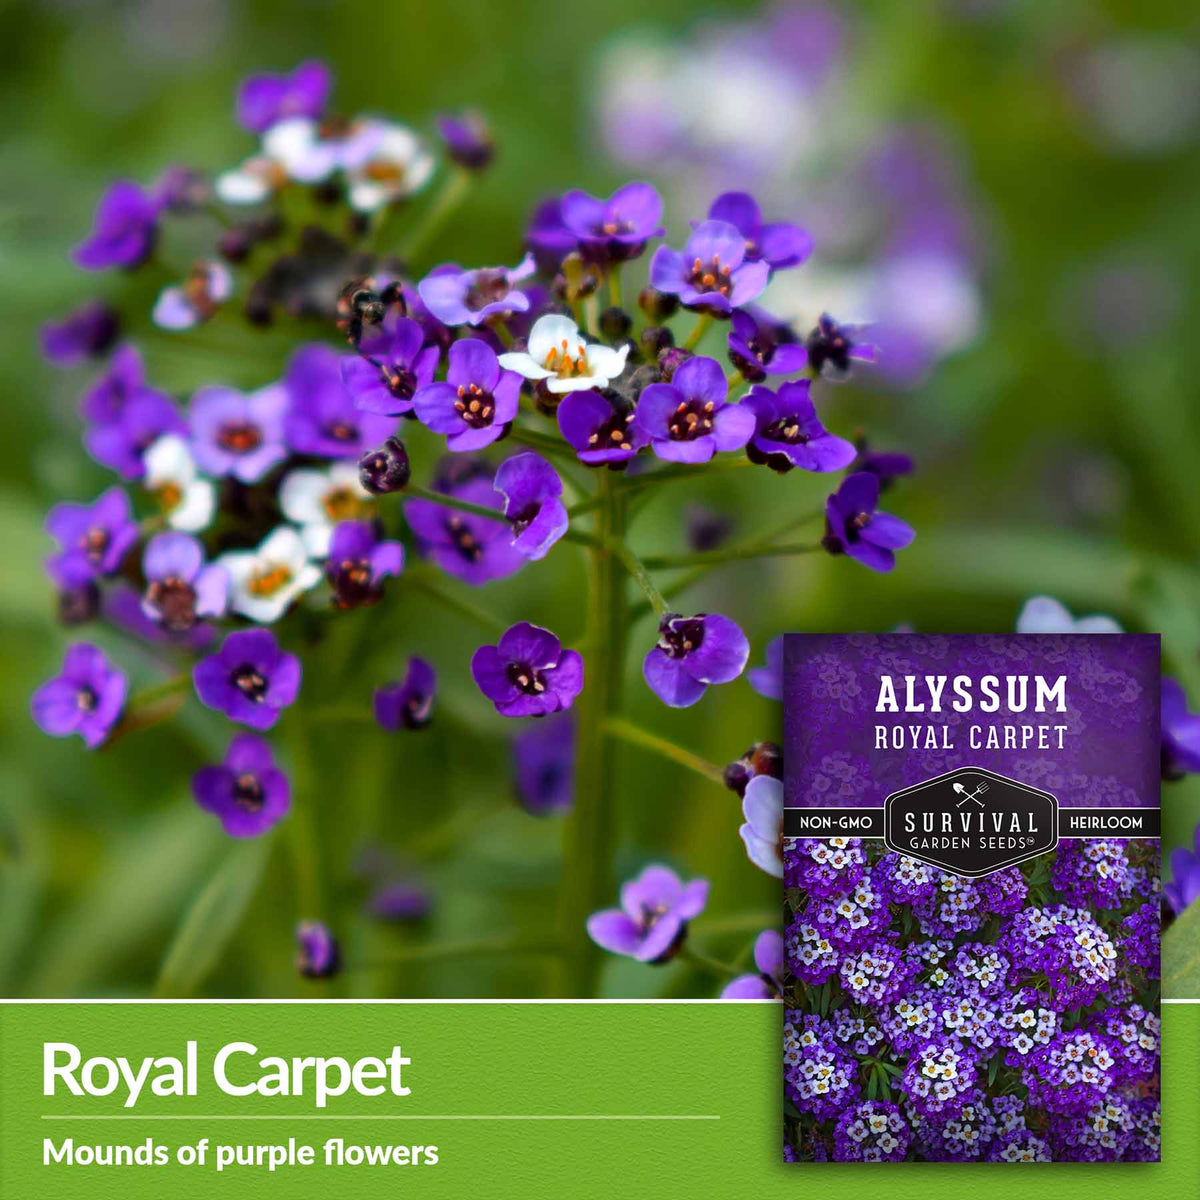 Royal Carpet - mounds of purple flowers